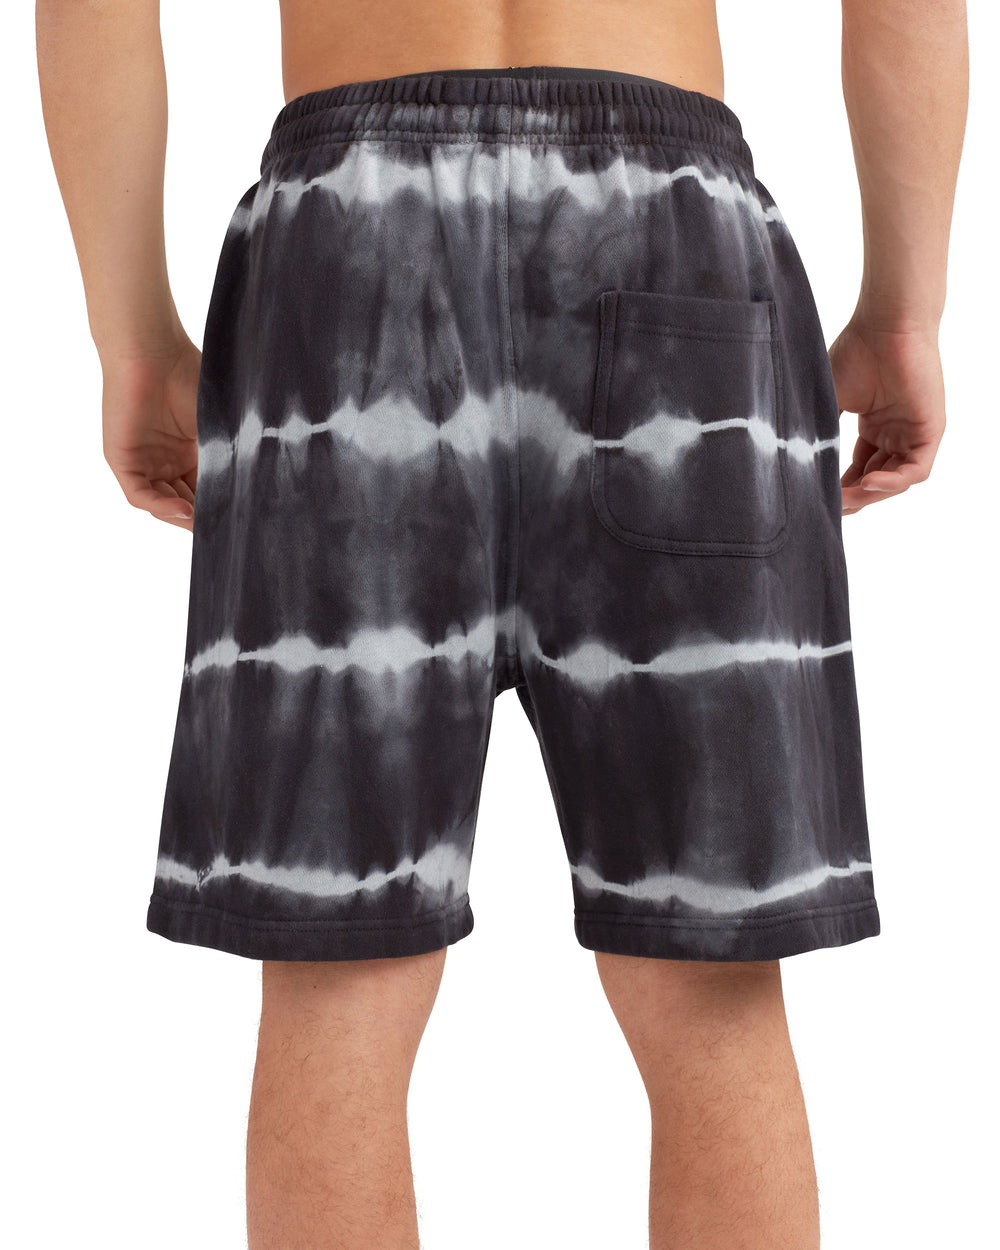 The Jogger Black Tie-Dyed Fleece Shorts | Body Glove